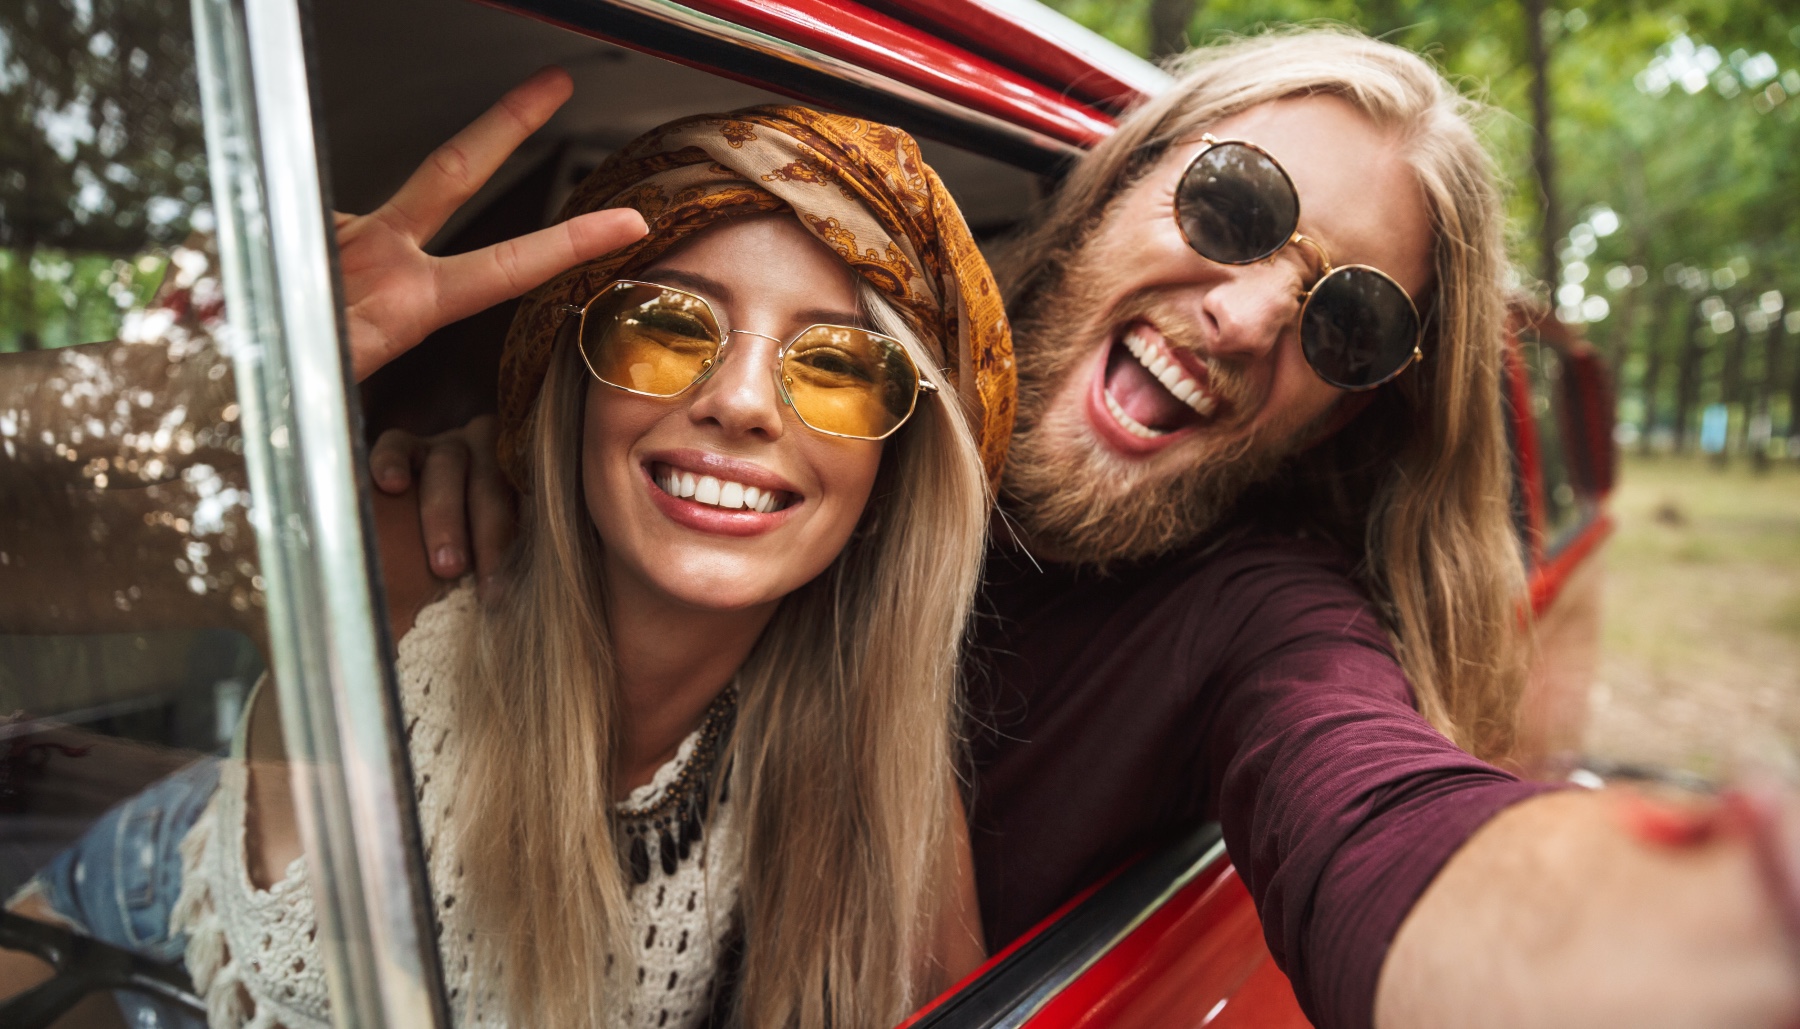 Hippies wearing sunglasses in a van